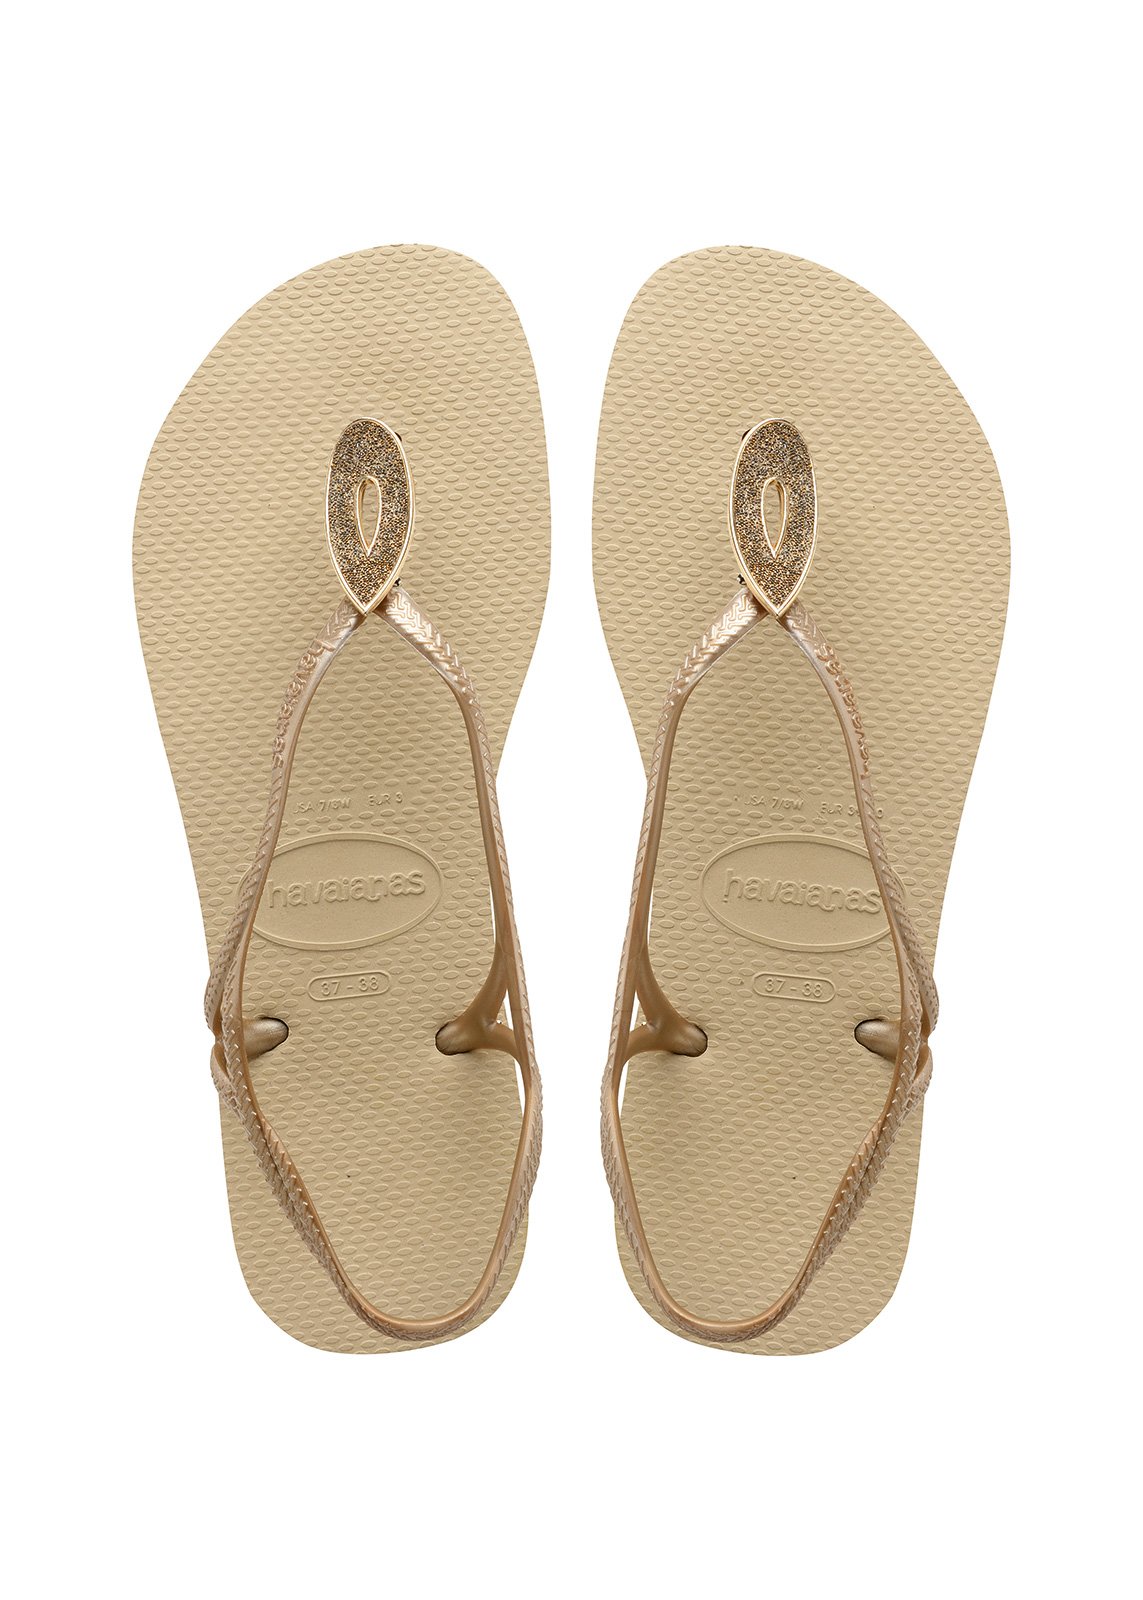 lee cooper sandals online shopping